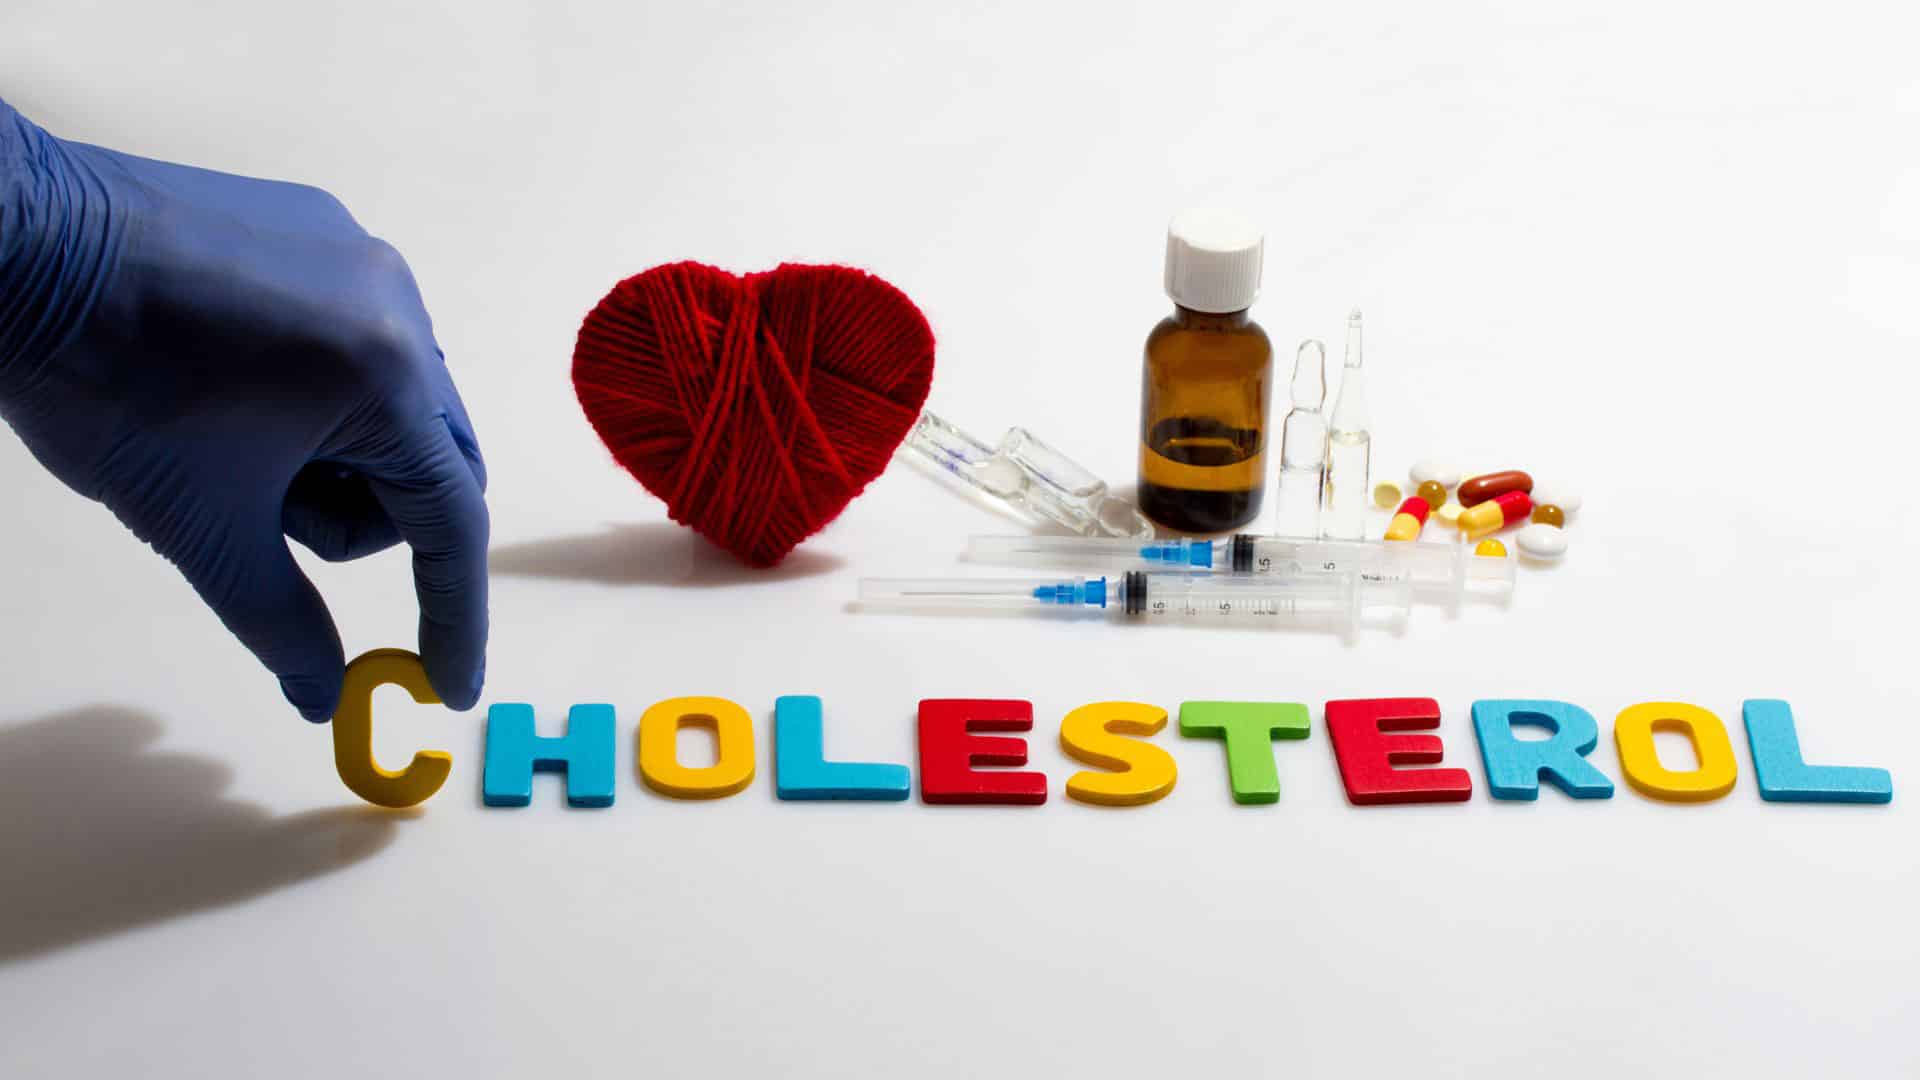 Image showing cholestrol